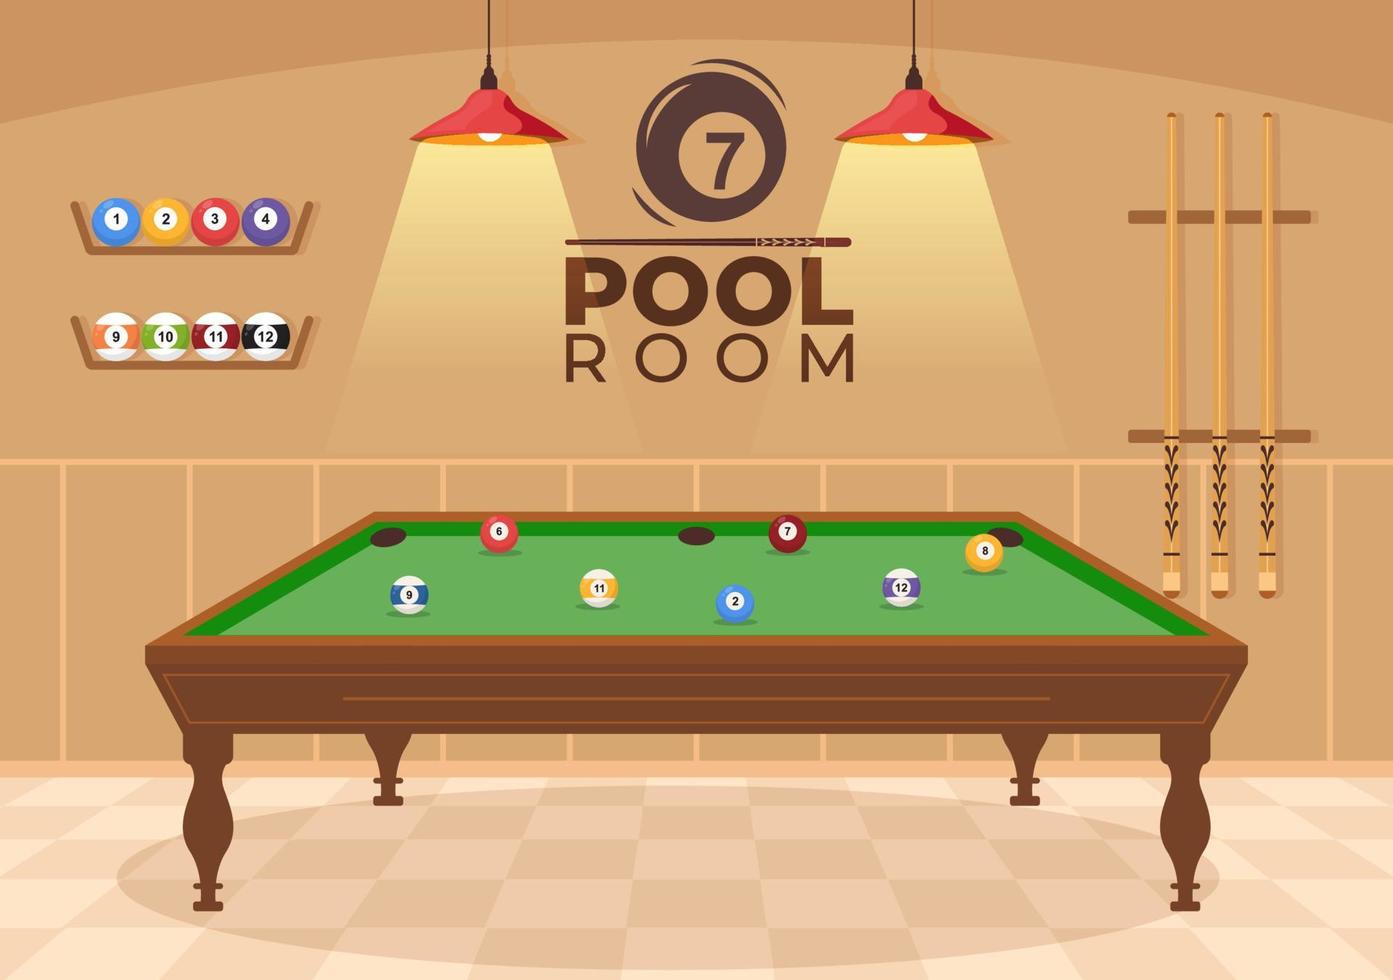 biljart spel handgetekende cartoon platte achtergrond afbeelding met pool kamer met stok en biljartballen in sportclub vector